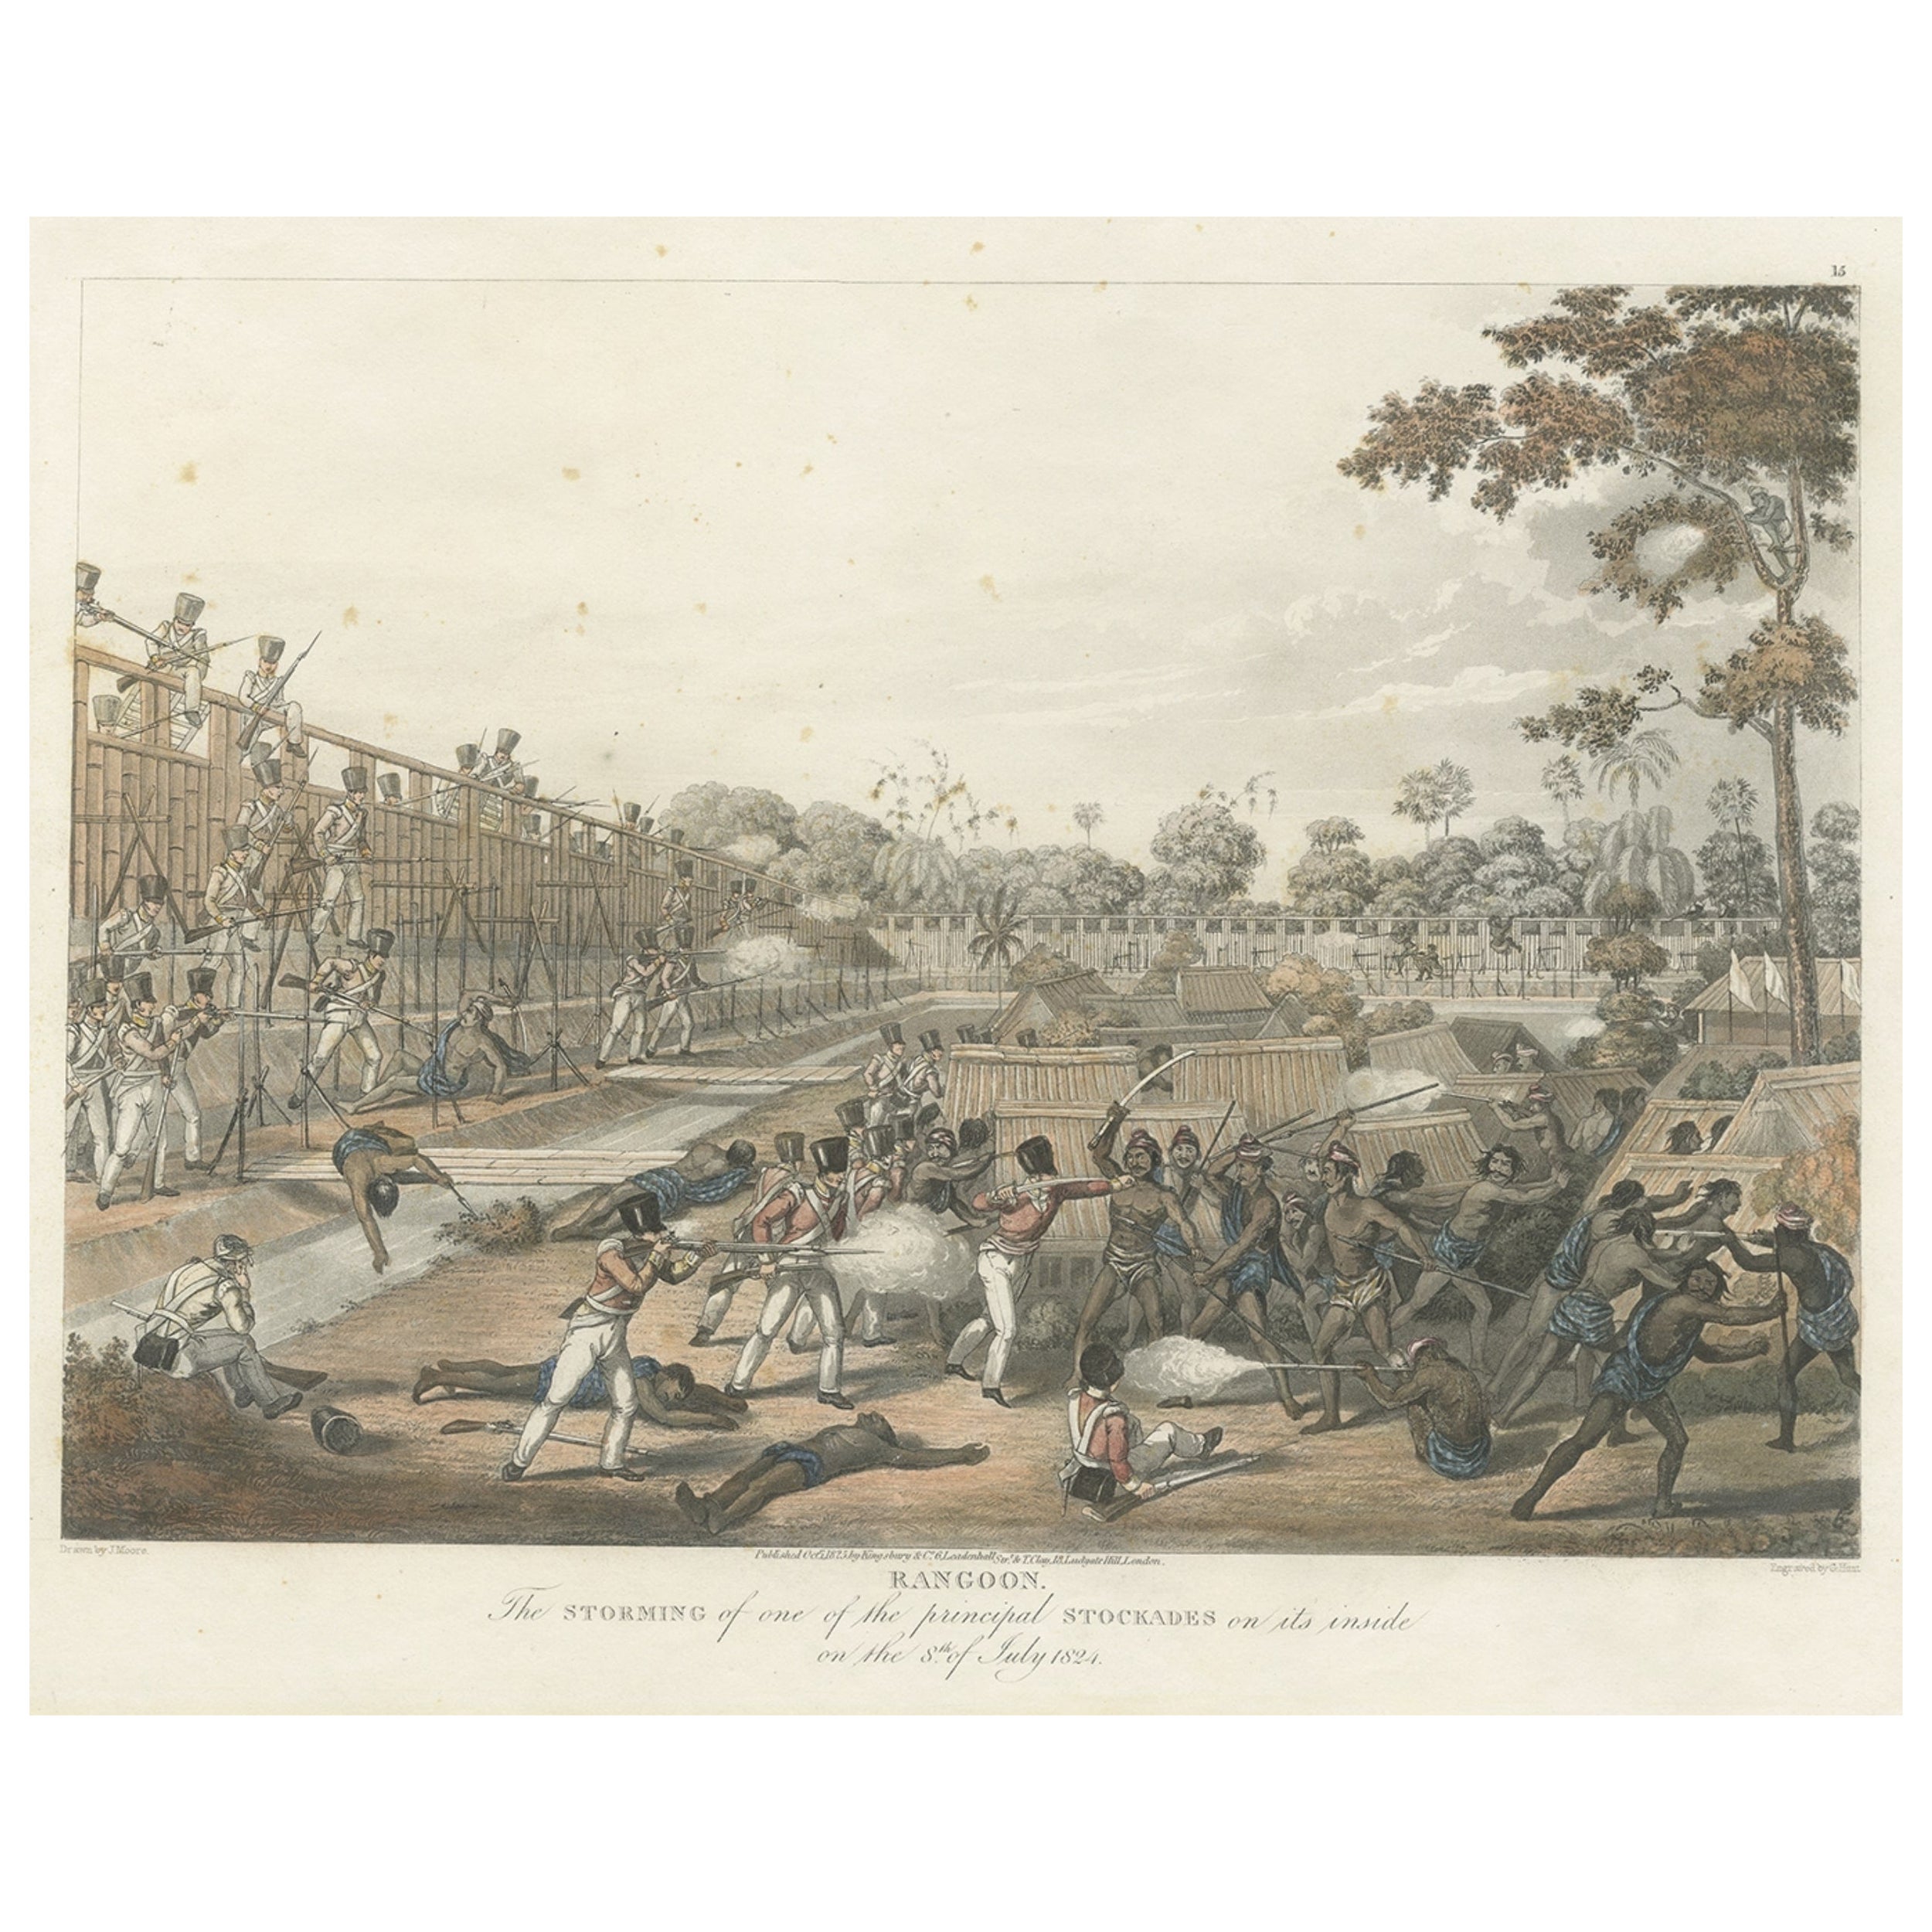 Antique Print of a War Scene in Rangoon Between the Burmese and British, 1825